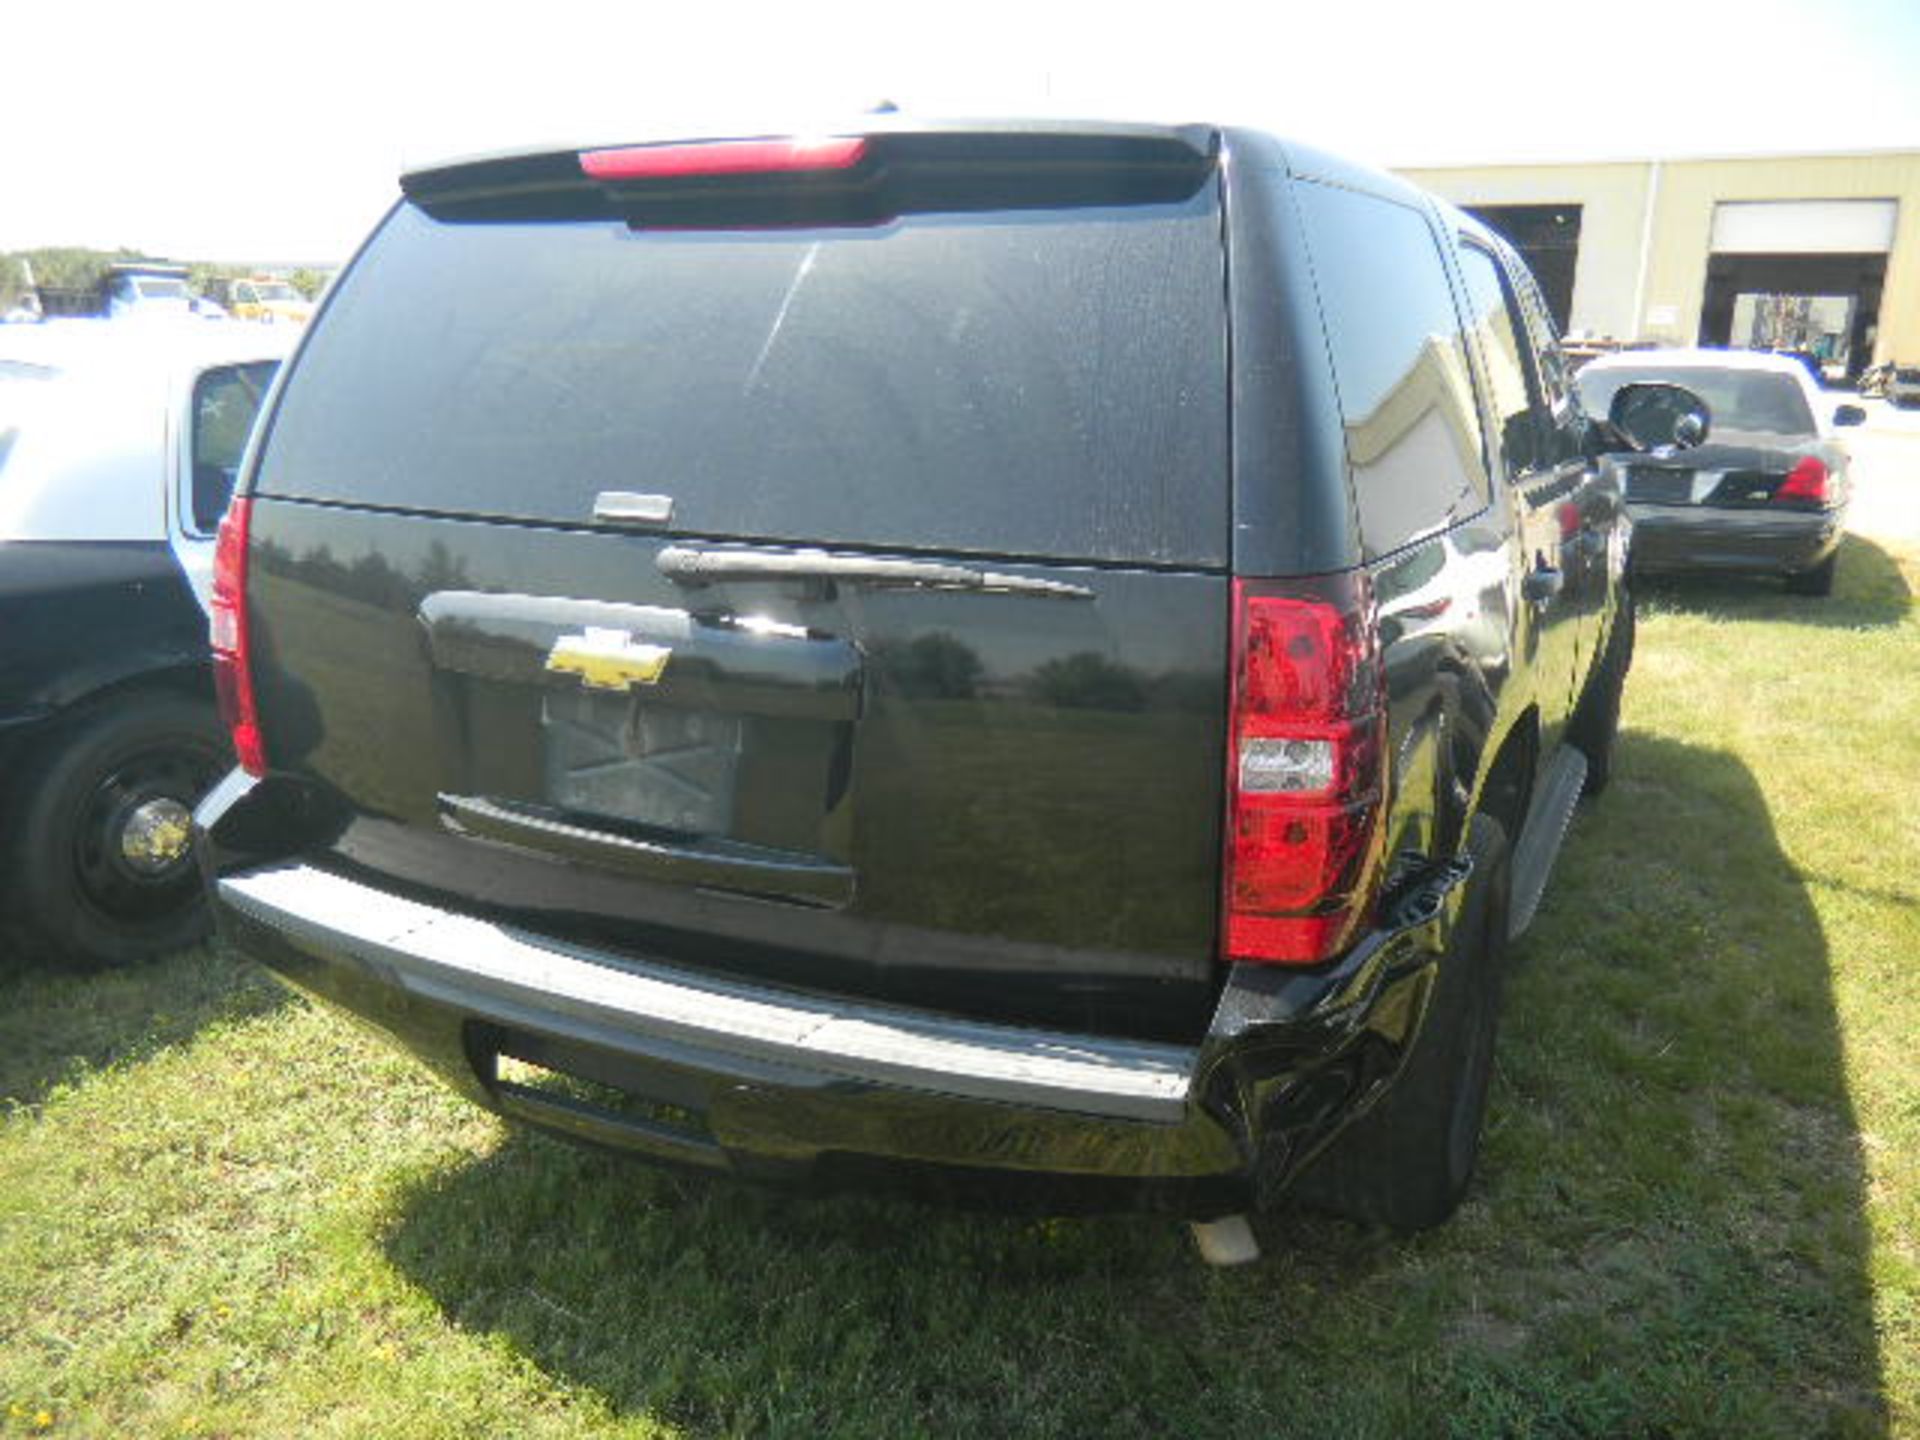 2010 Chevrolet Tahoe Black Patrol SUV - Asset I.D. #259 - Last of Vin (220846) - Image 4 of 9